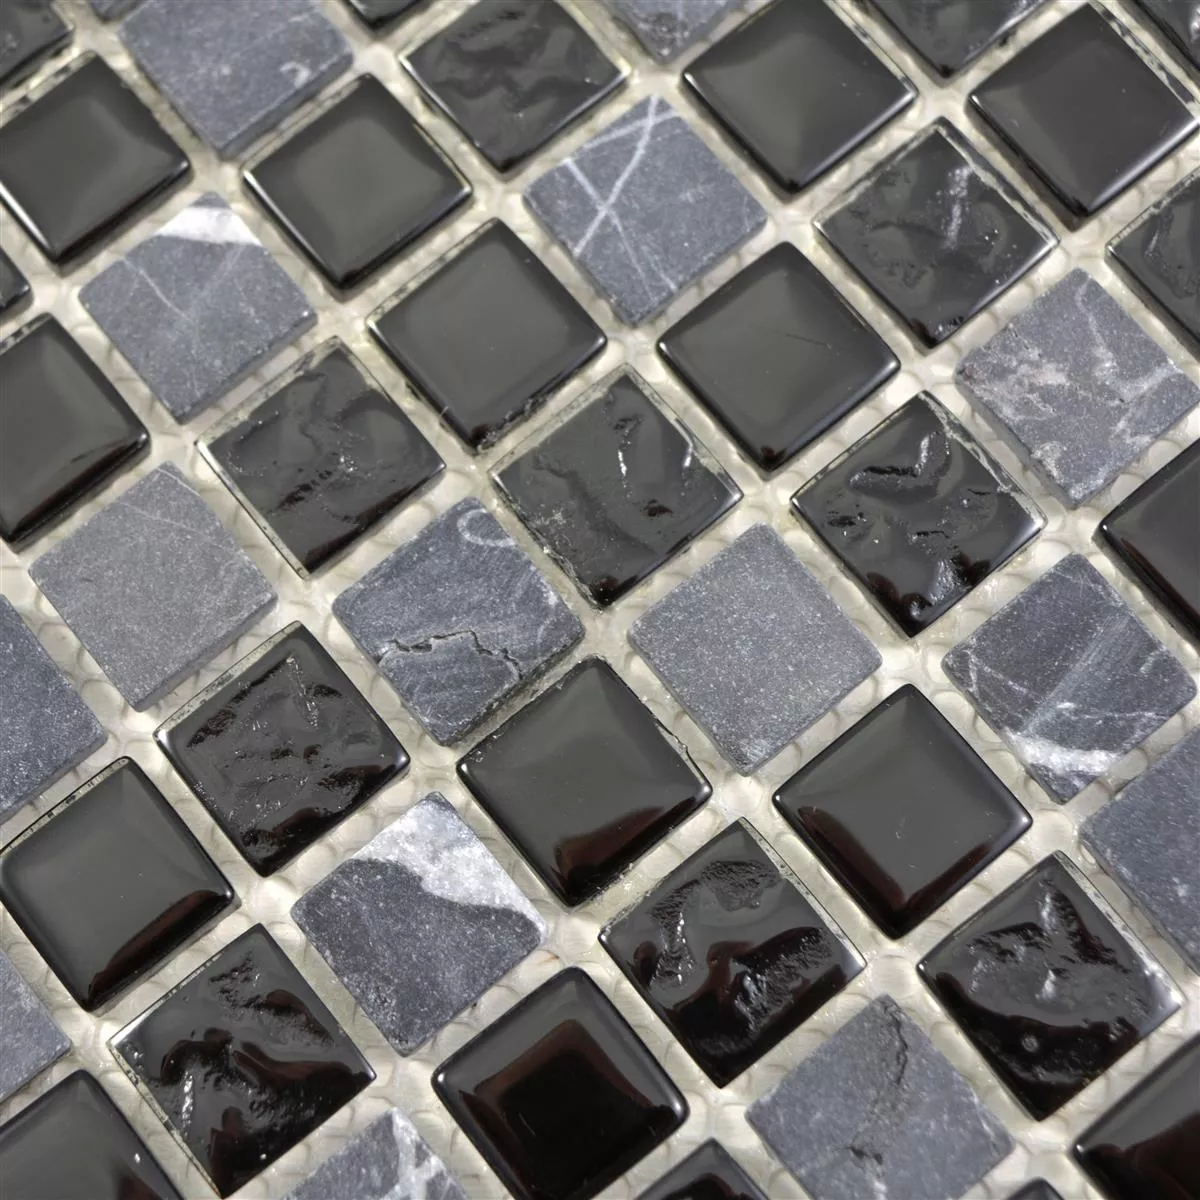 Sample Glas Natural Stone Mosaic Tiles Zekova Black Grey